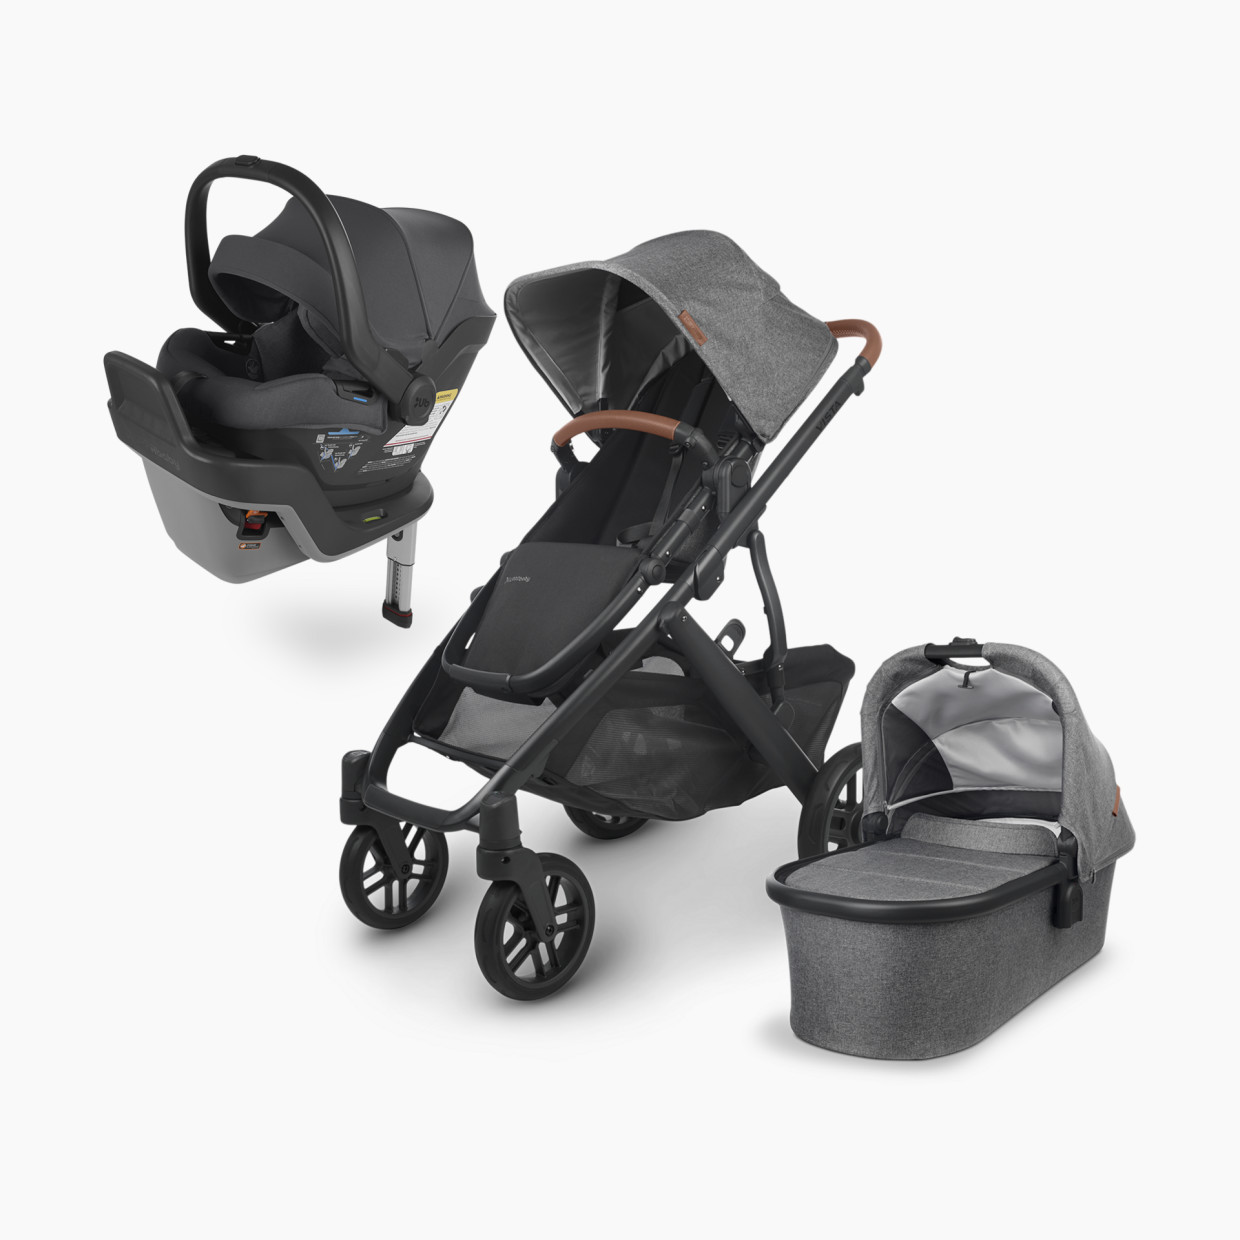 UPPAbaby MESA MAX Infant Car Seat & VISTA V2 Stroller Travel System - Greyson.